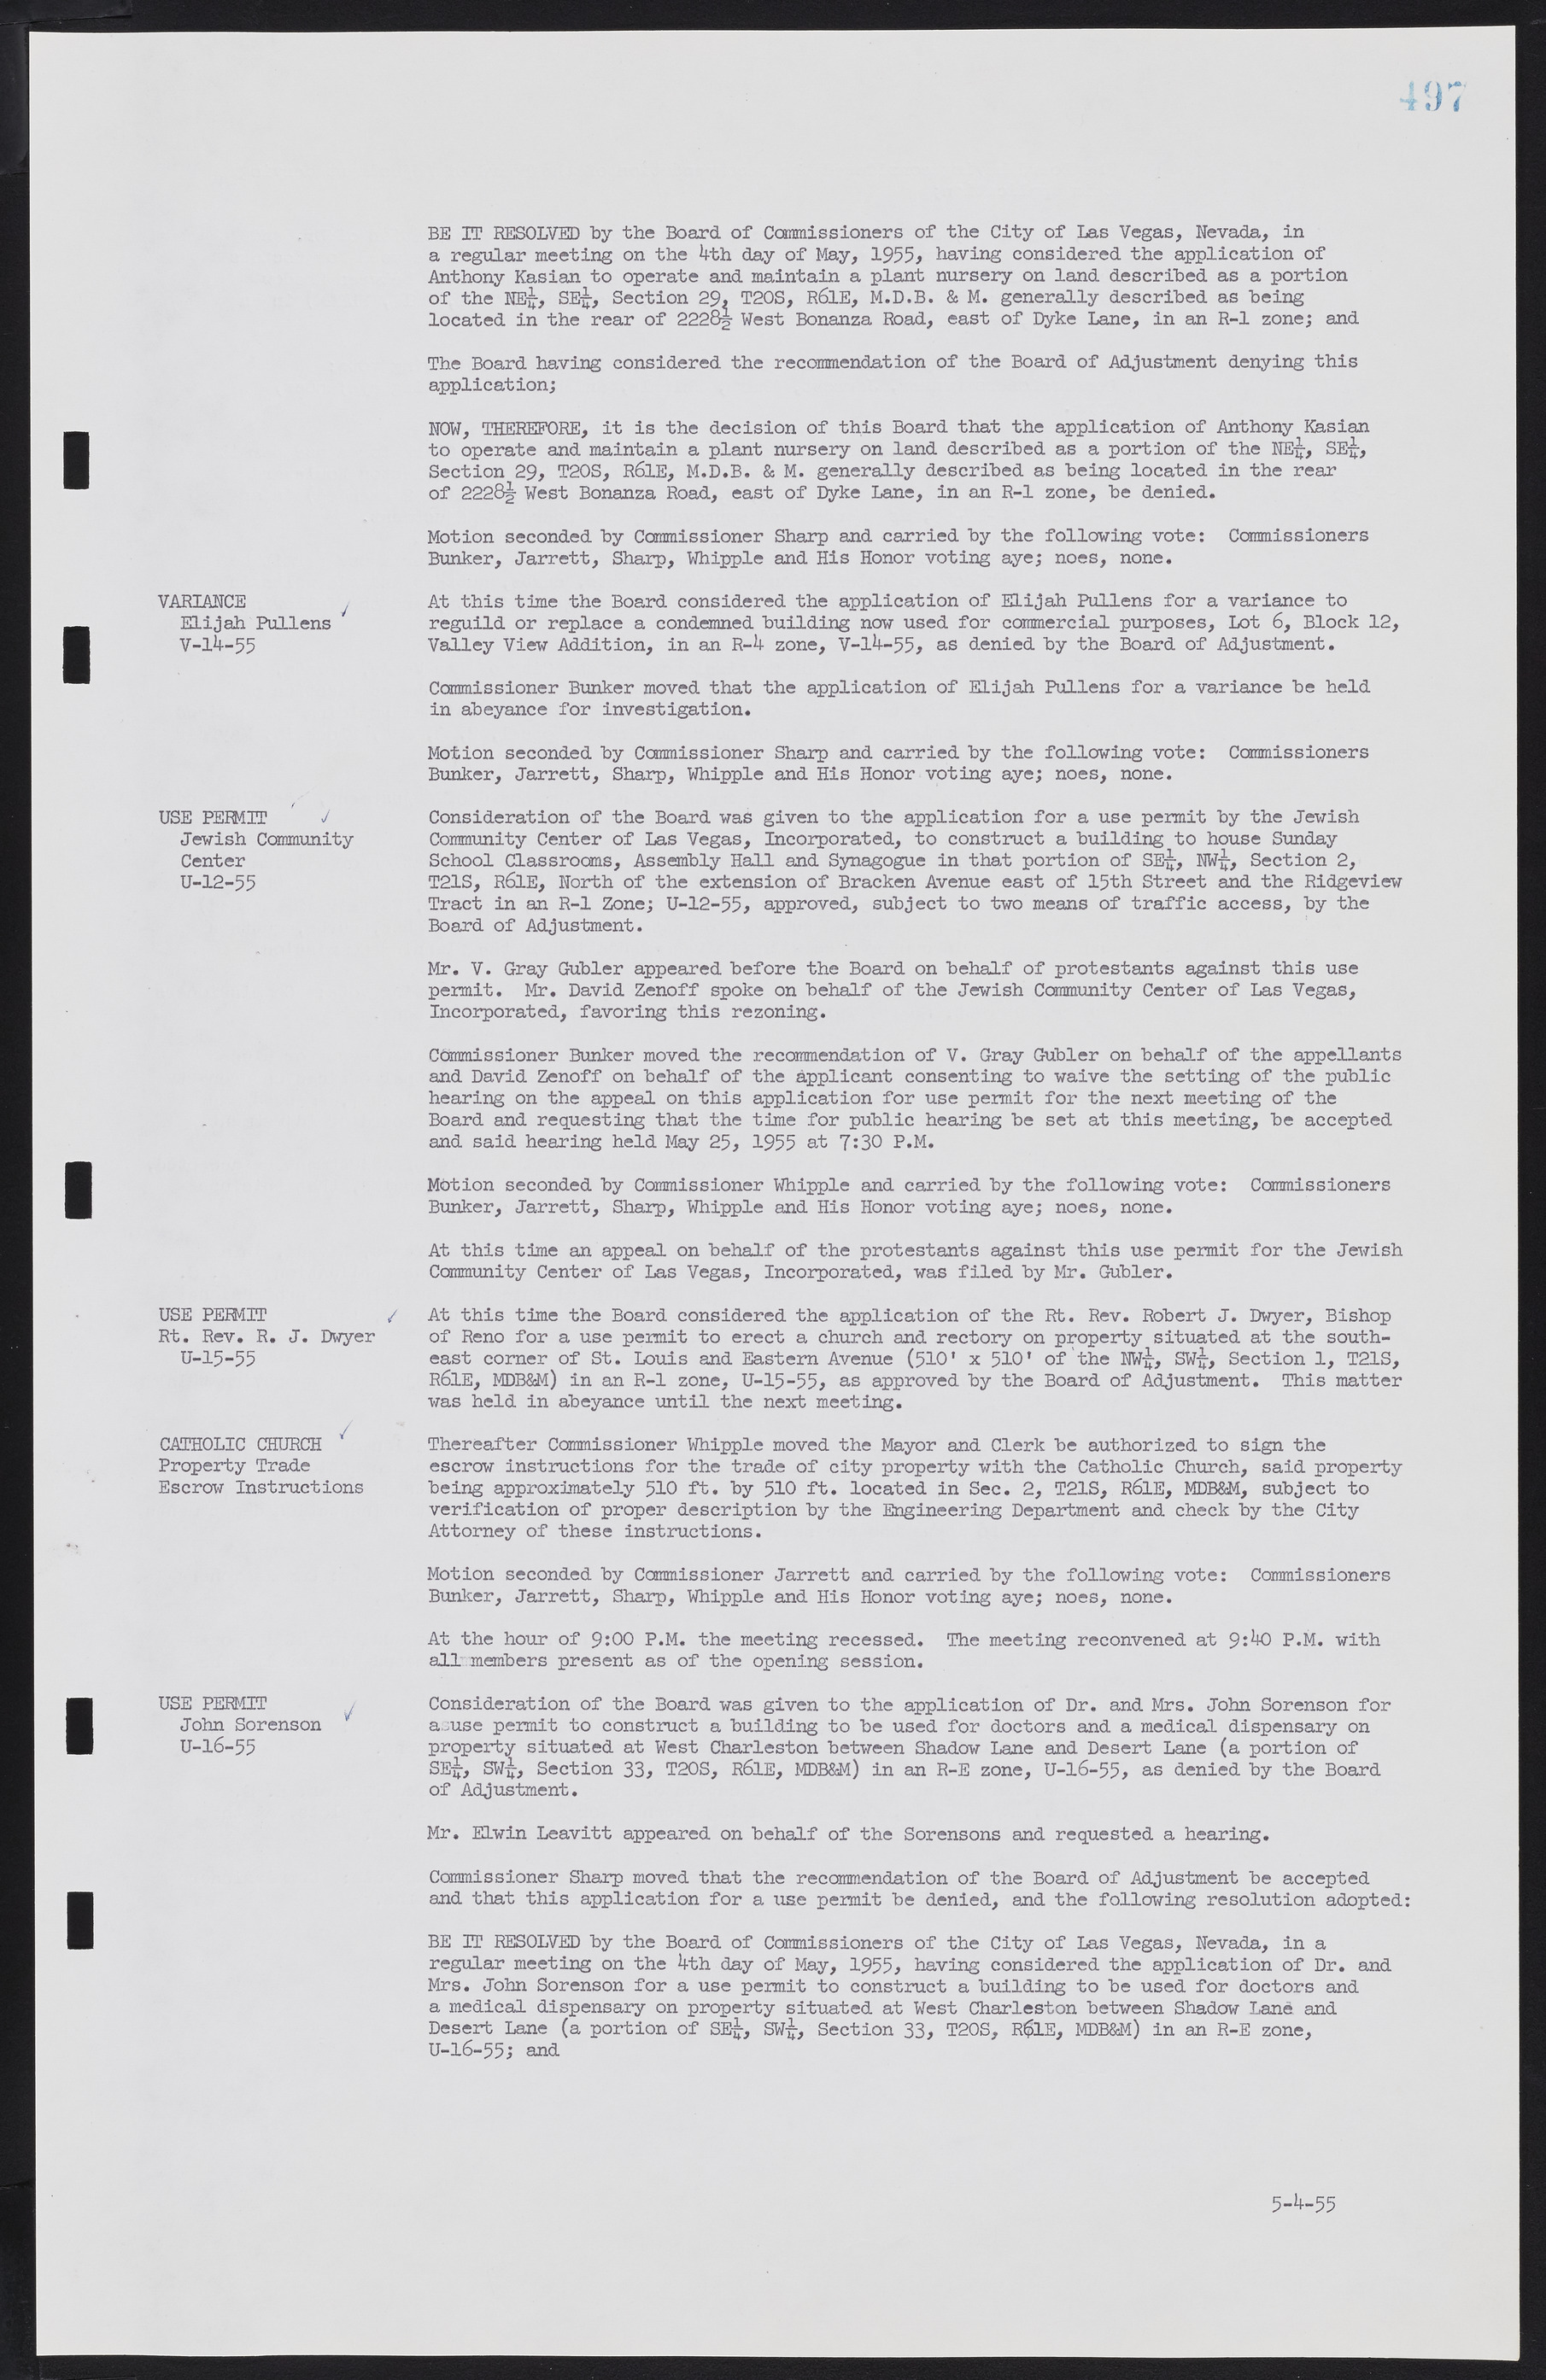 Las Vegas City Commission Minutes, February 17, 1954 to September 21, 1955, lvc000009-503